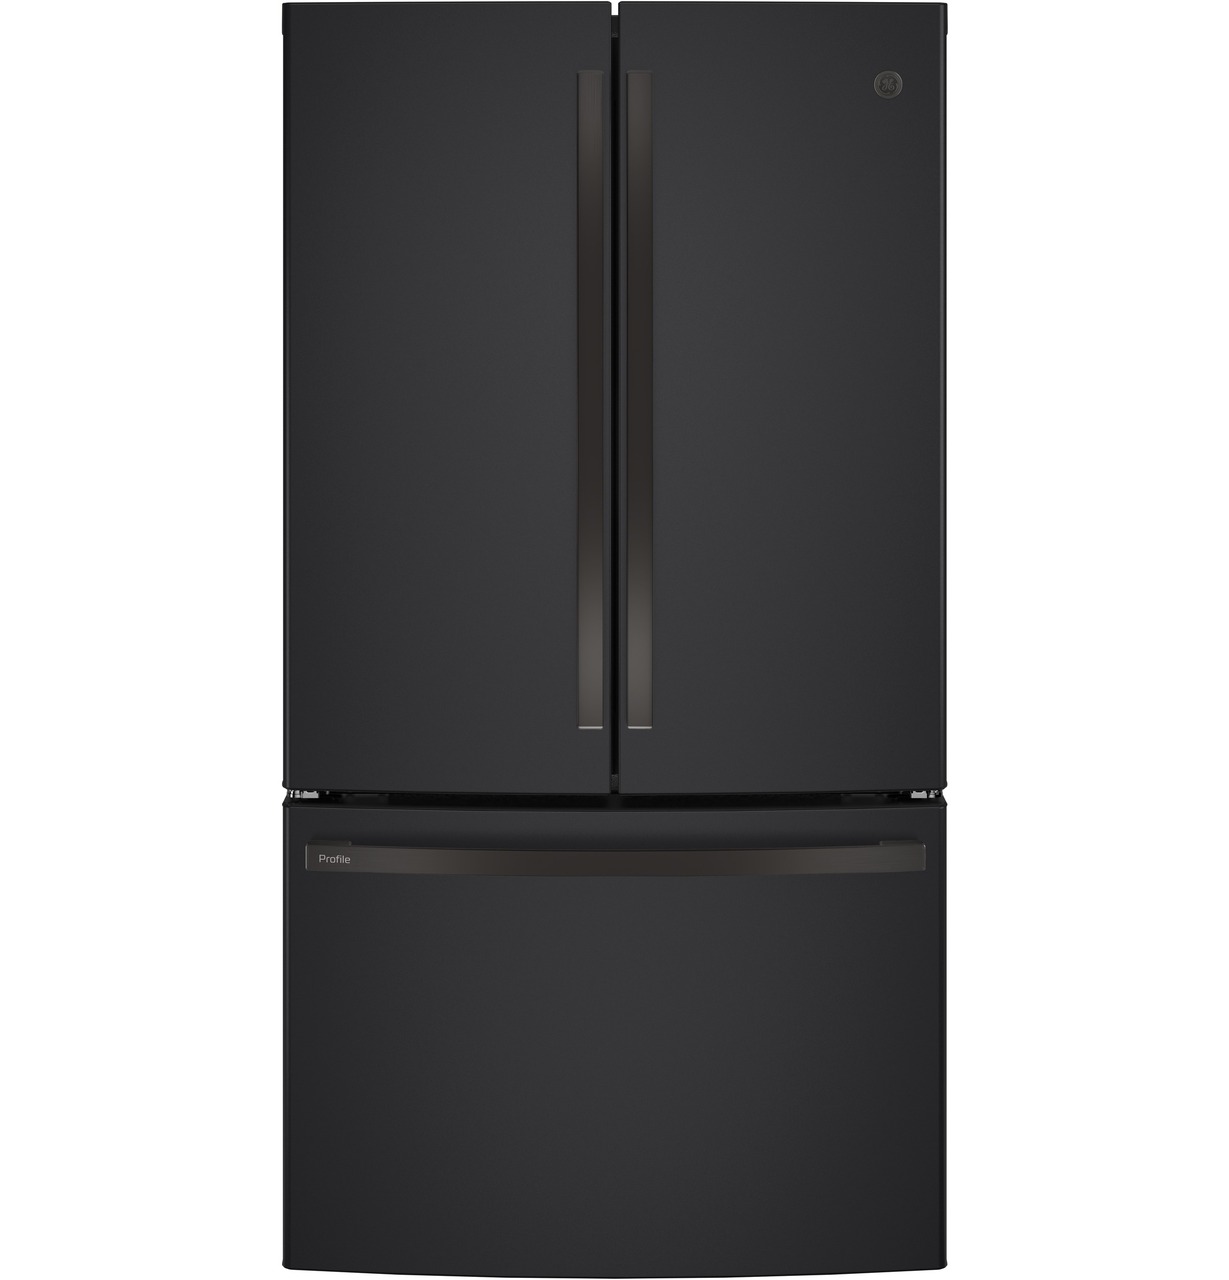 GE Energy Star counter depth french door refrigerator